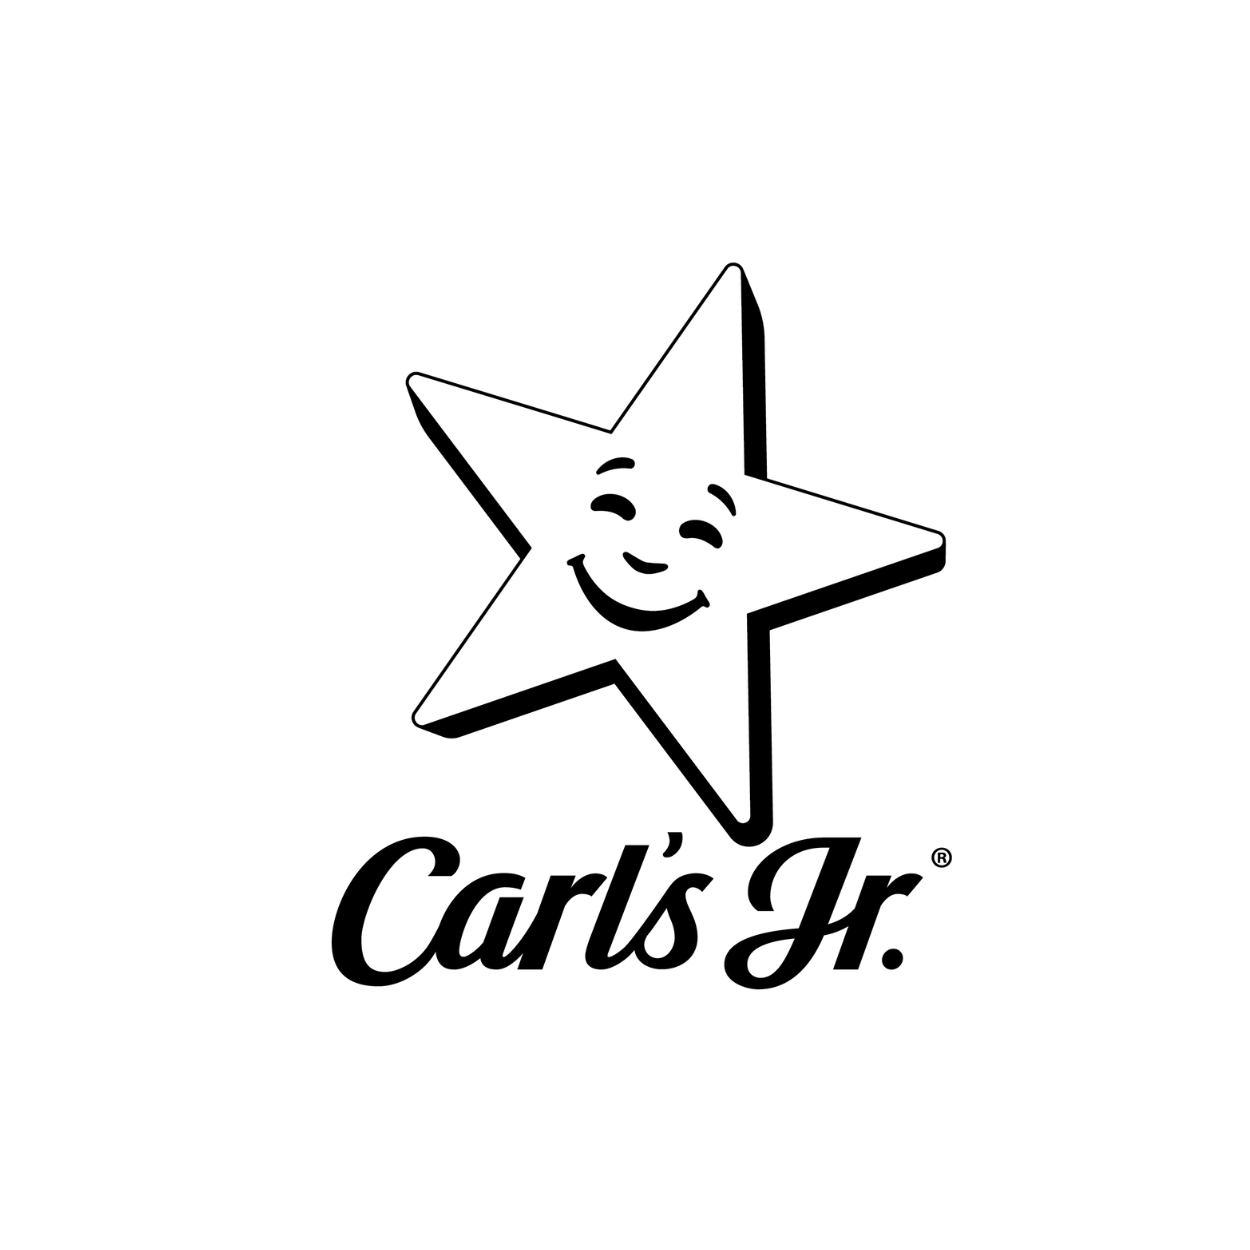 Carl’s Jnr.